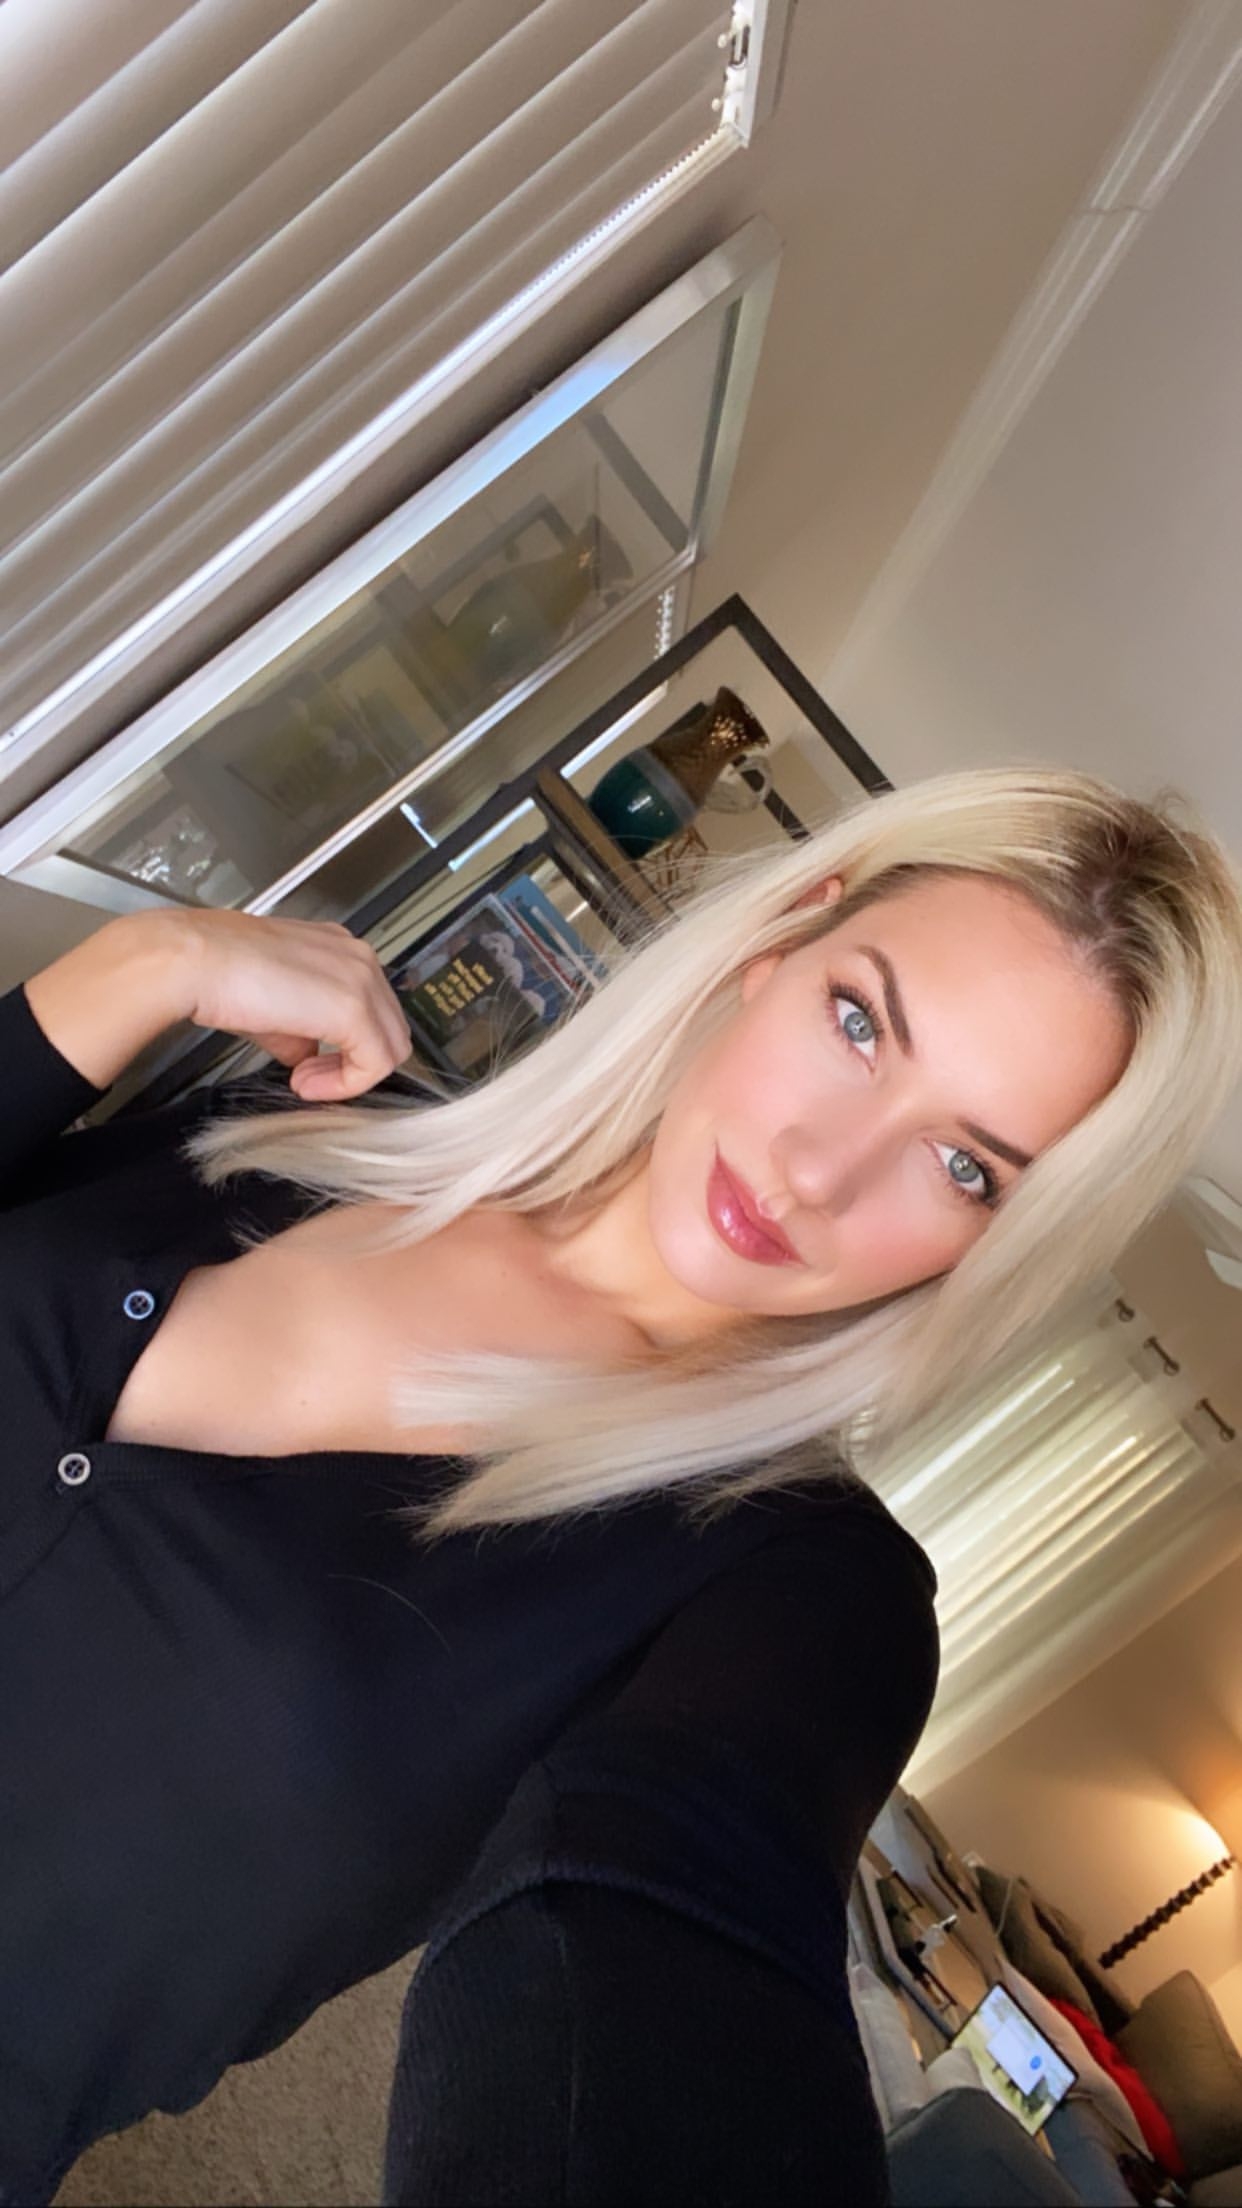 Paige Spiranac â€“ Social media photos and videos